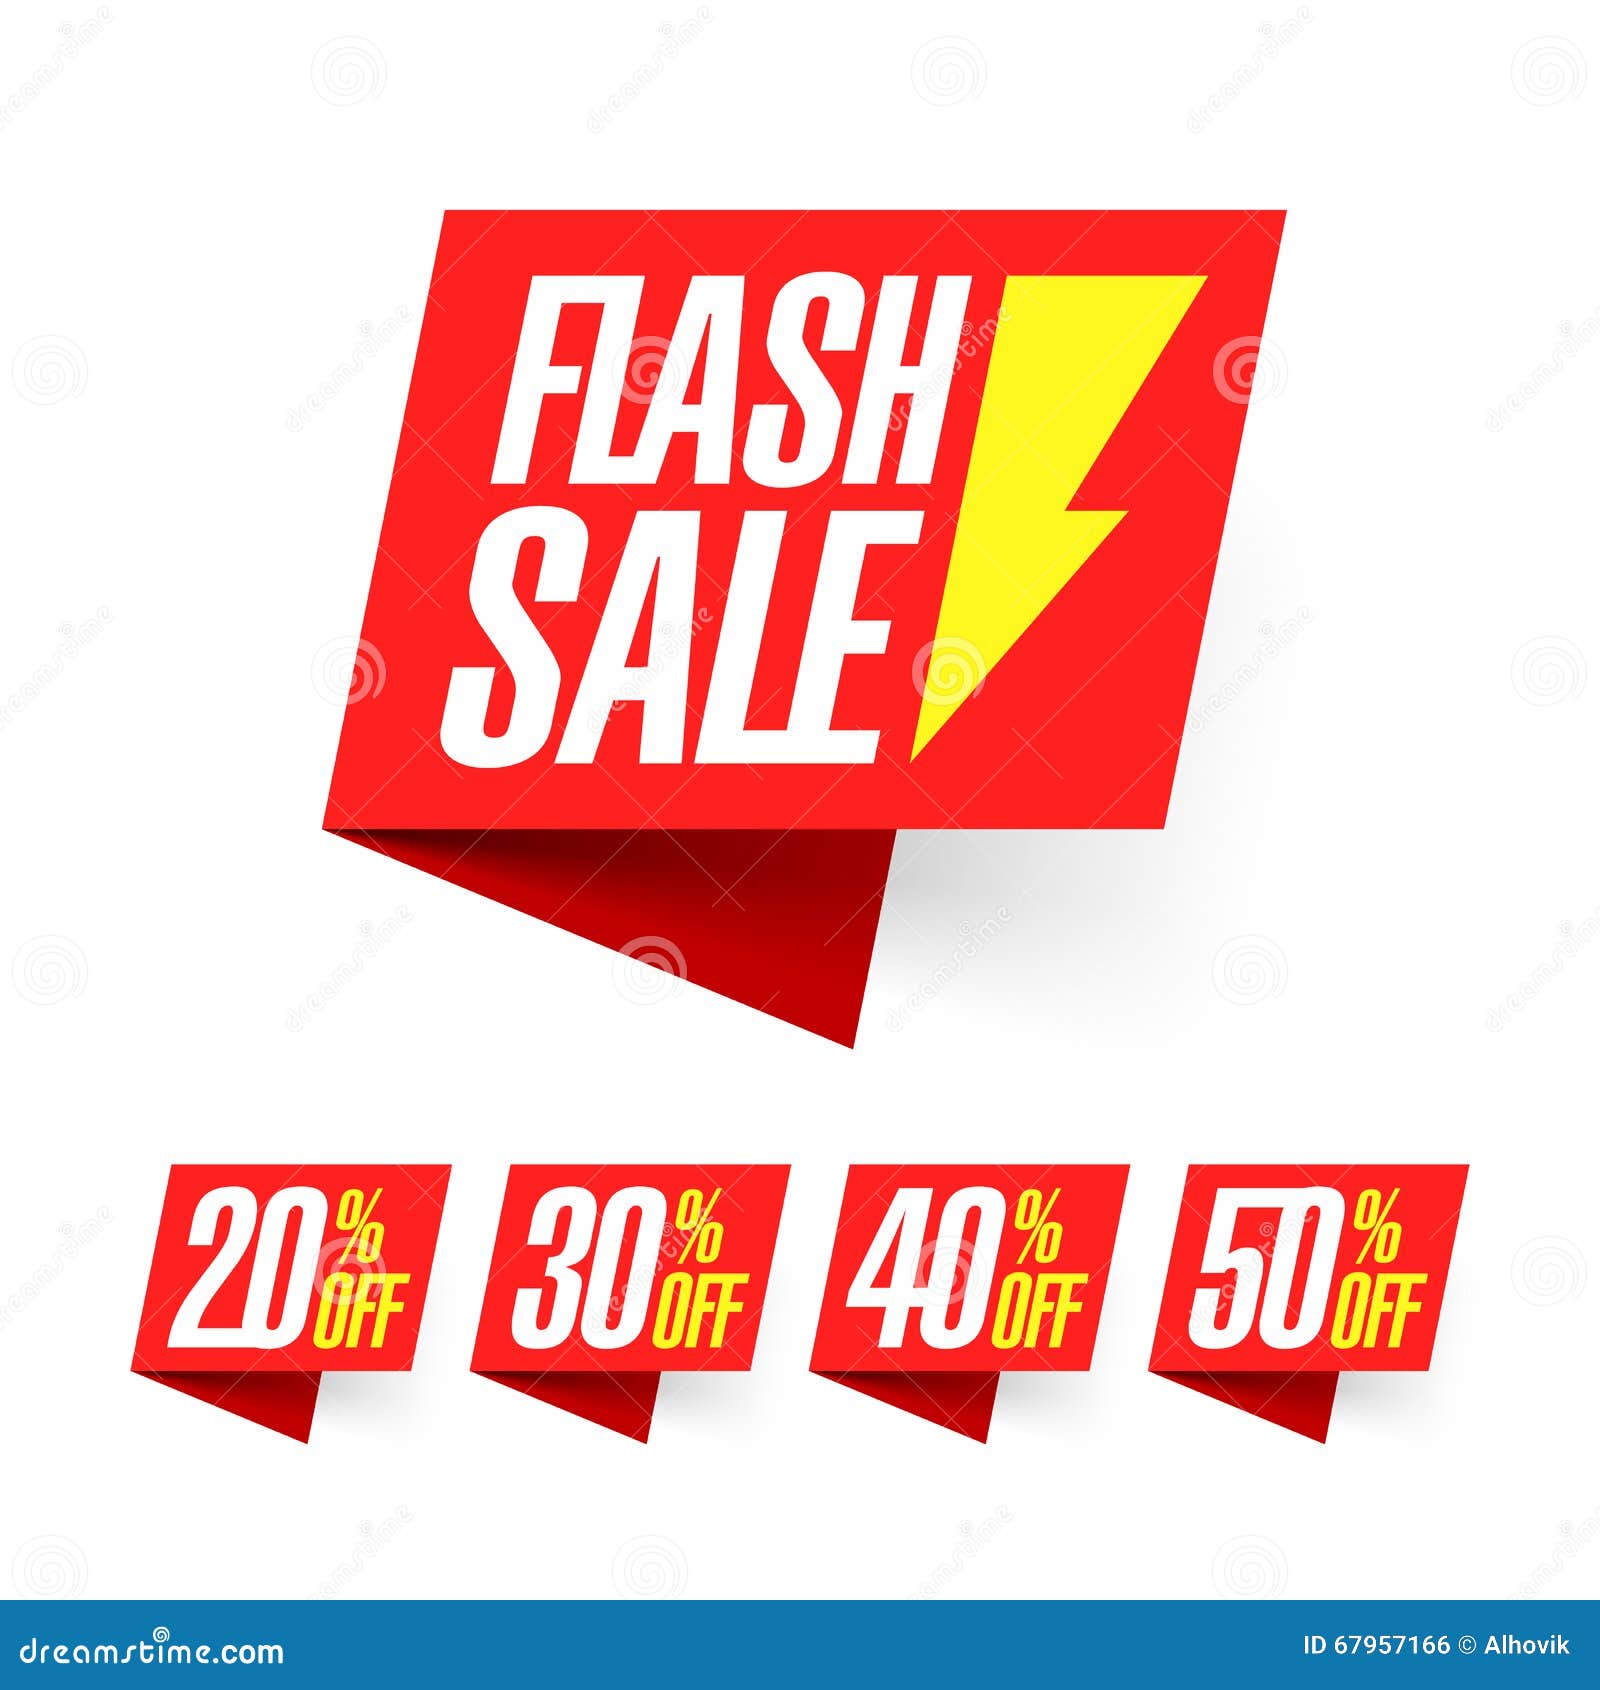 https://thumbs.dreamstime.com/z/weekly-flash-sale-banner-deal-day-67957166.jpg